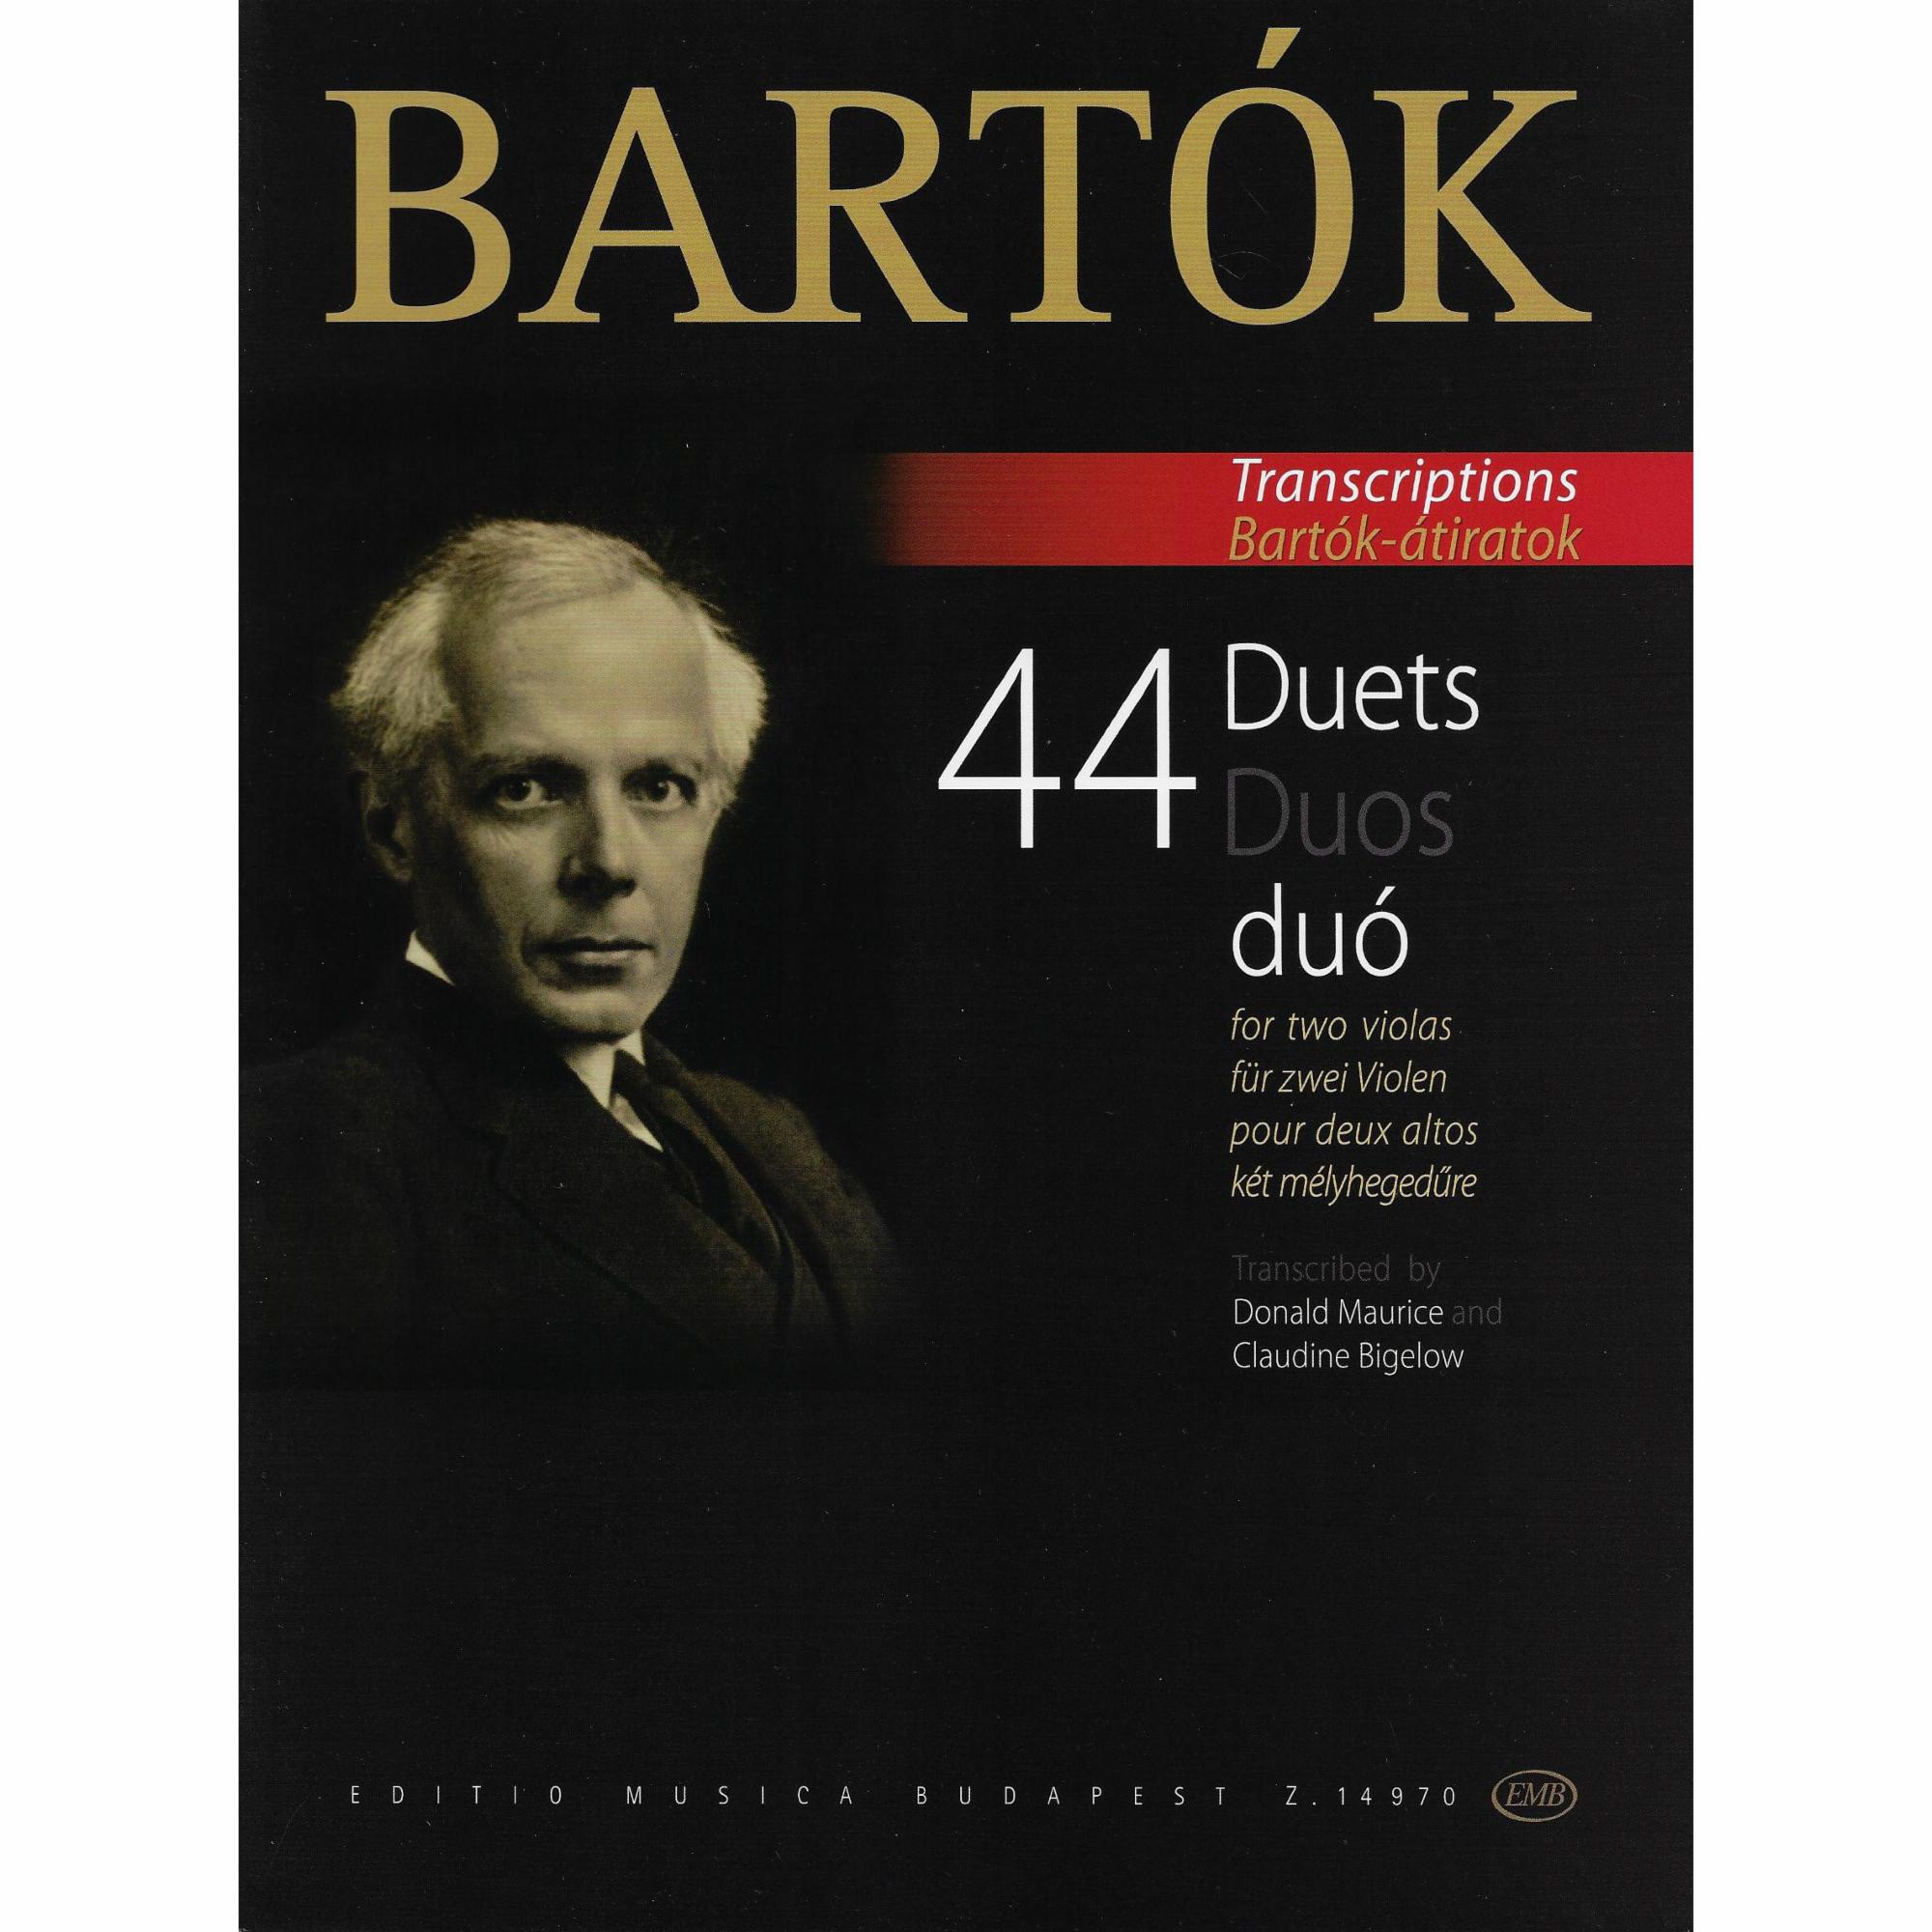 Bartok -- 44 Duets for Two Violas